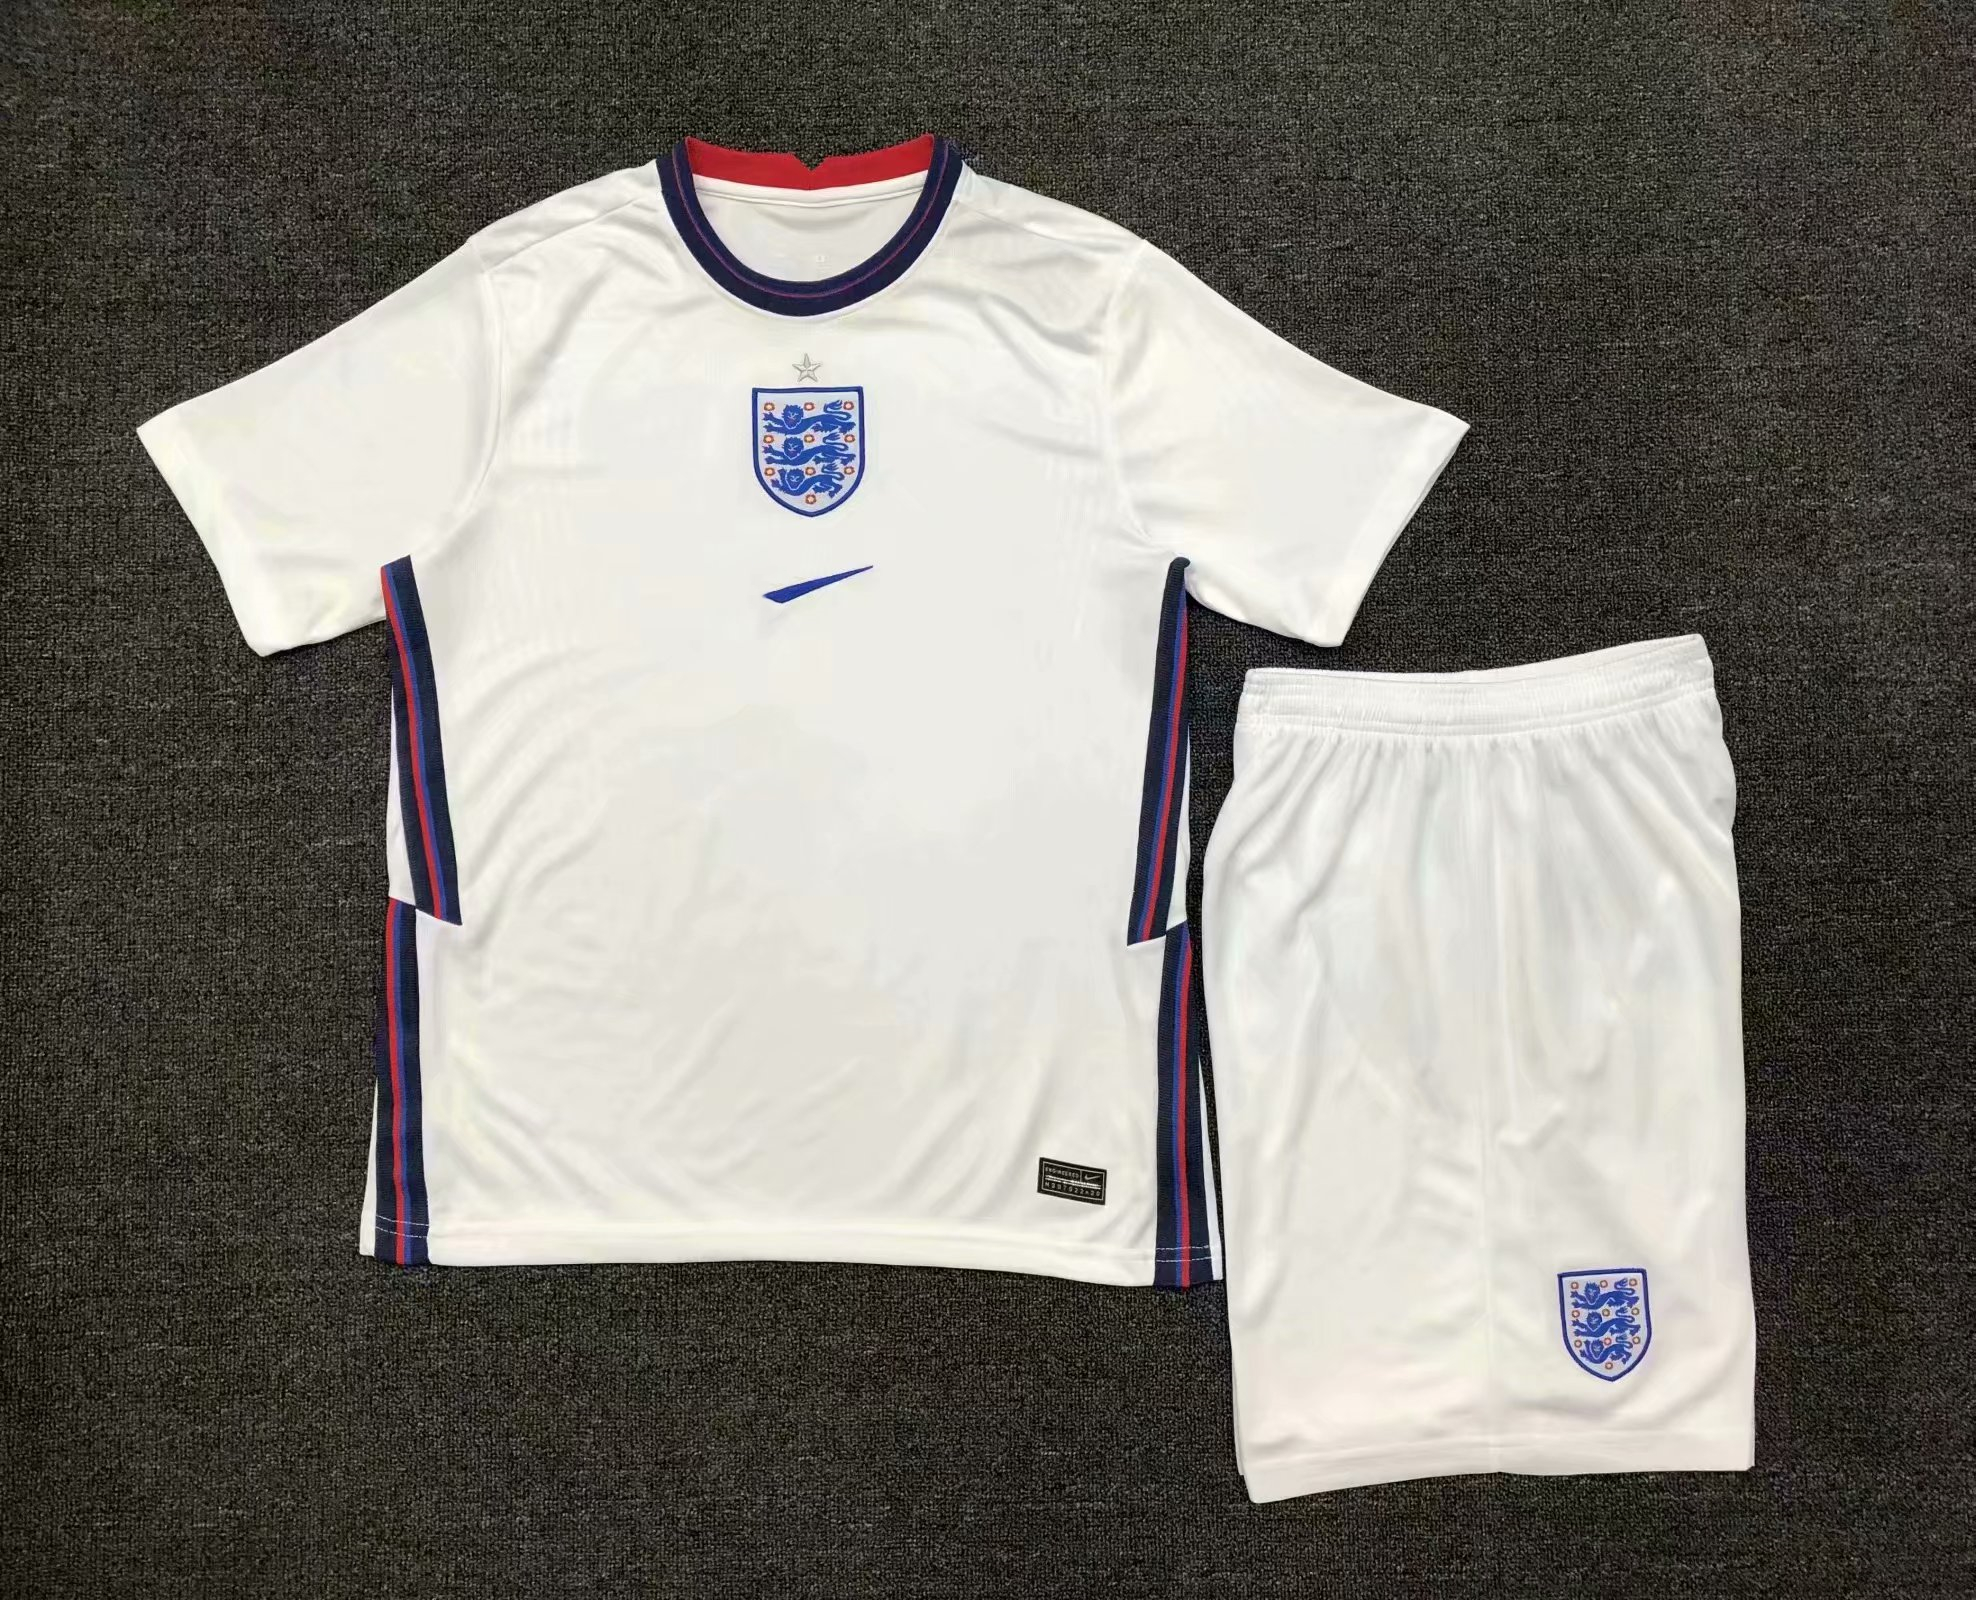 20202021 Children New England white soccer uniforms football kits